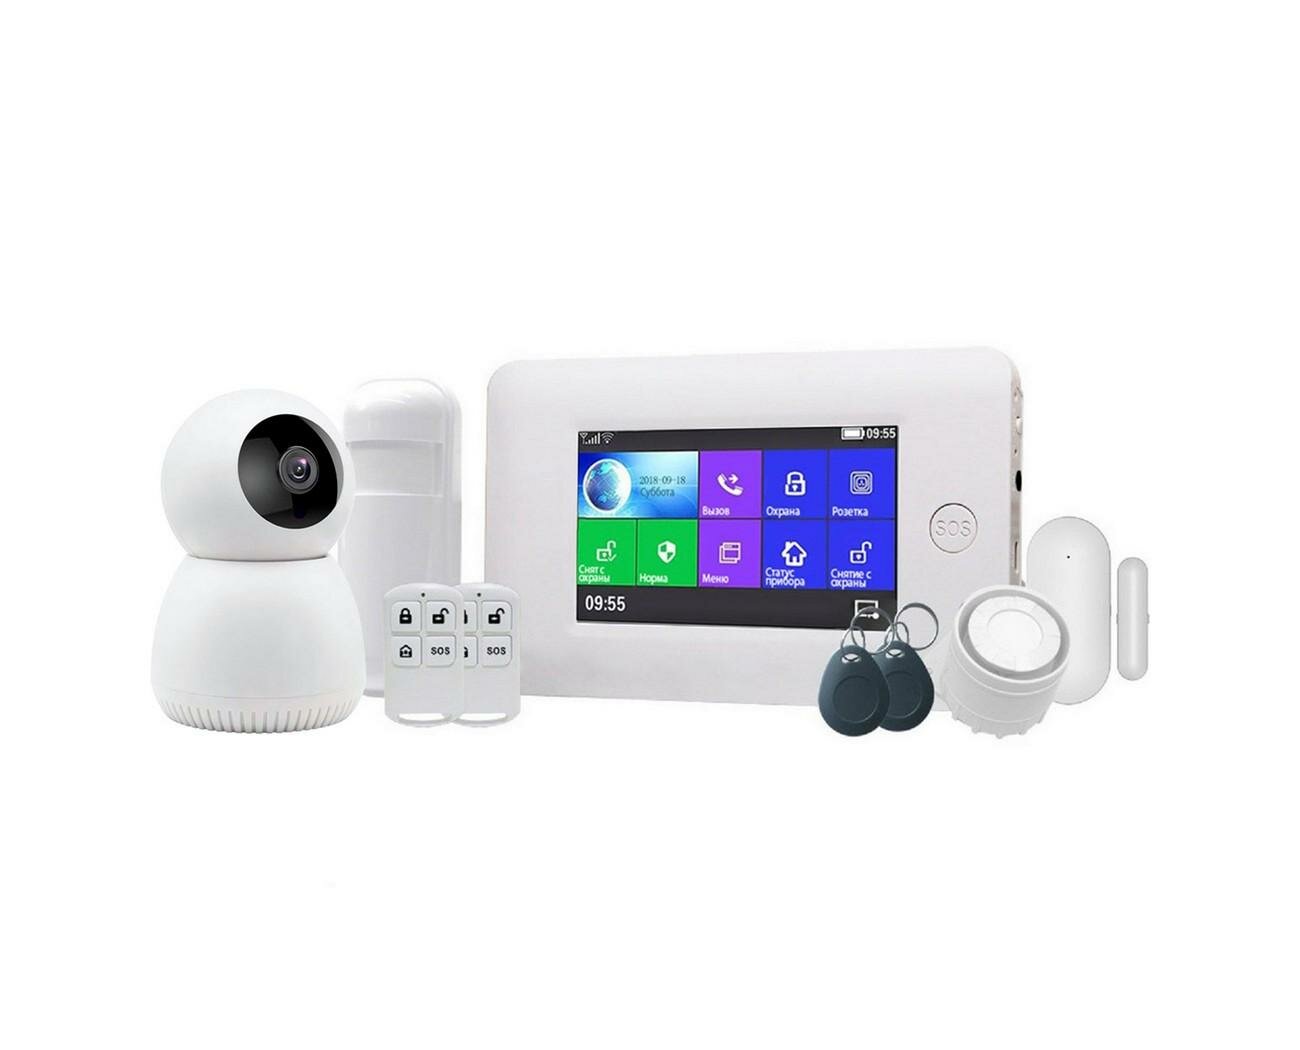 GSM Wi-Fi сигнализация для дачи с видеокамерой - Strazh Galaktika-GSM и HD-ком 107-ASW5 (O45043BE) для загородного дома, гаража, квартиры